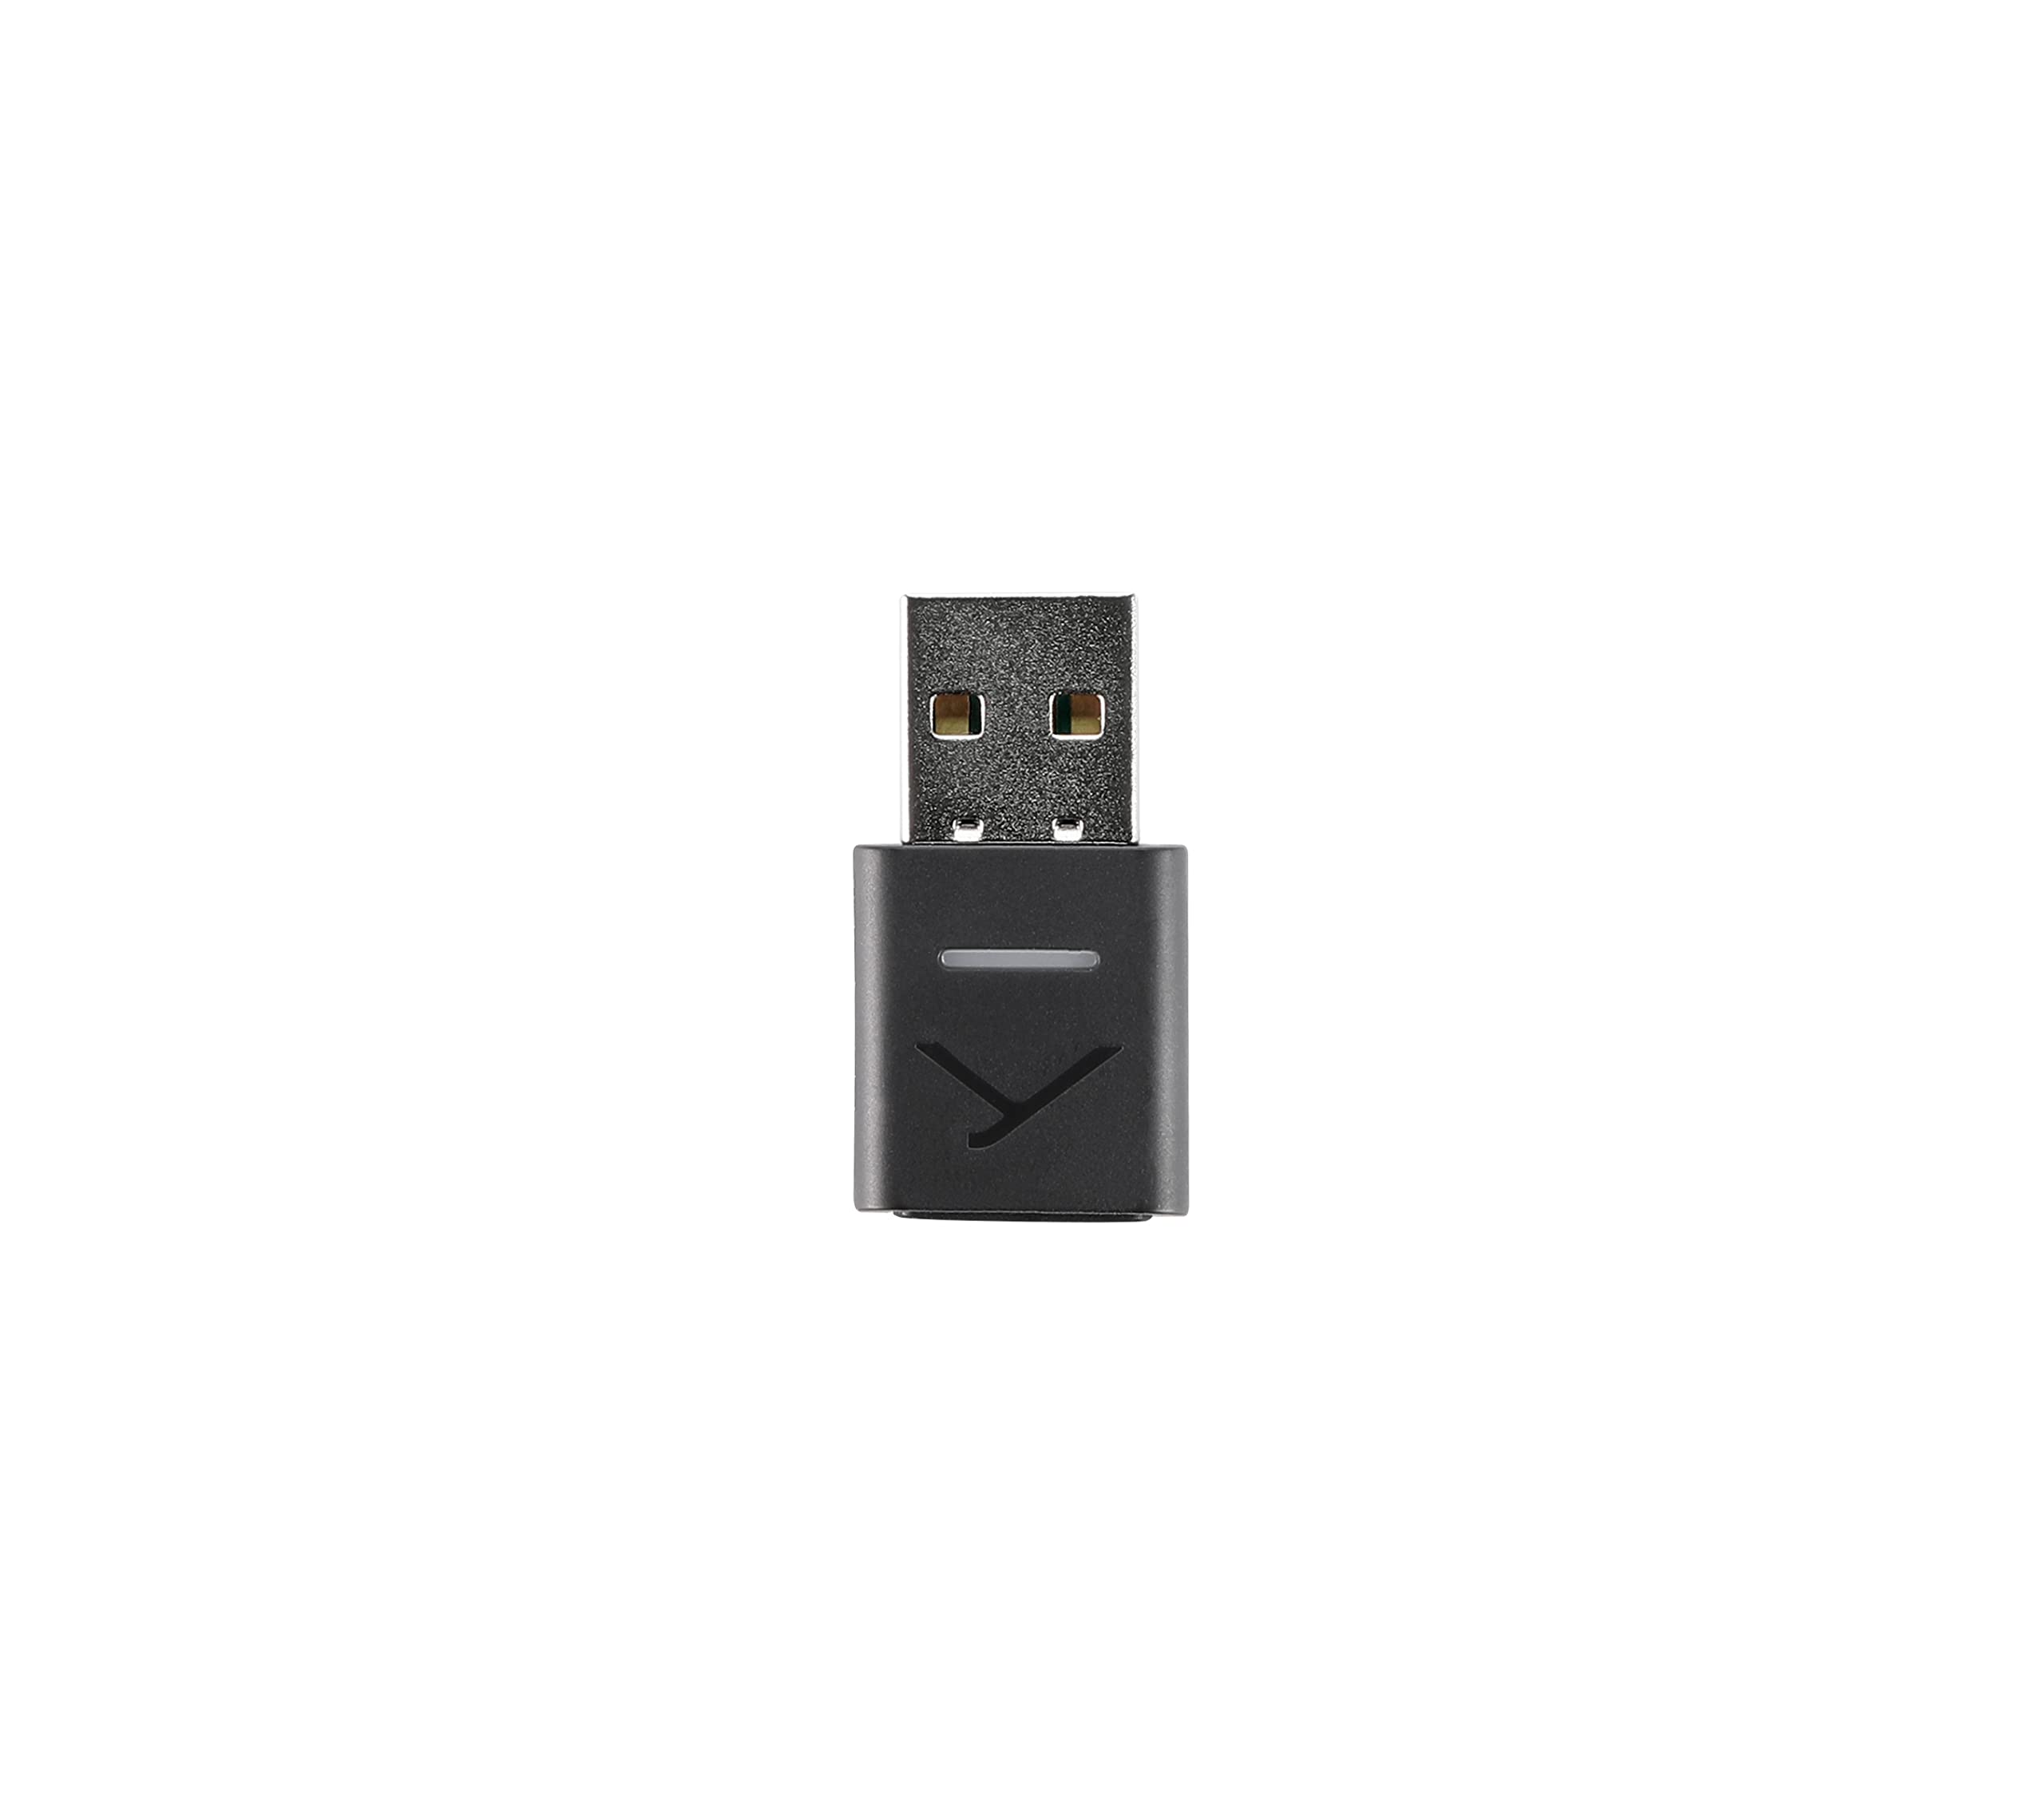 beyerdynamic USB Adapter for Space